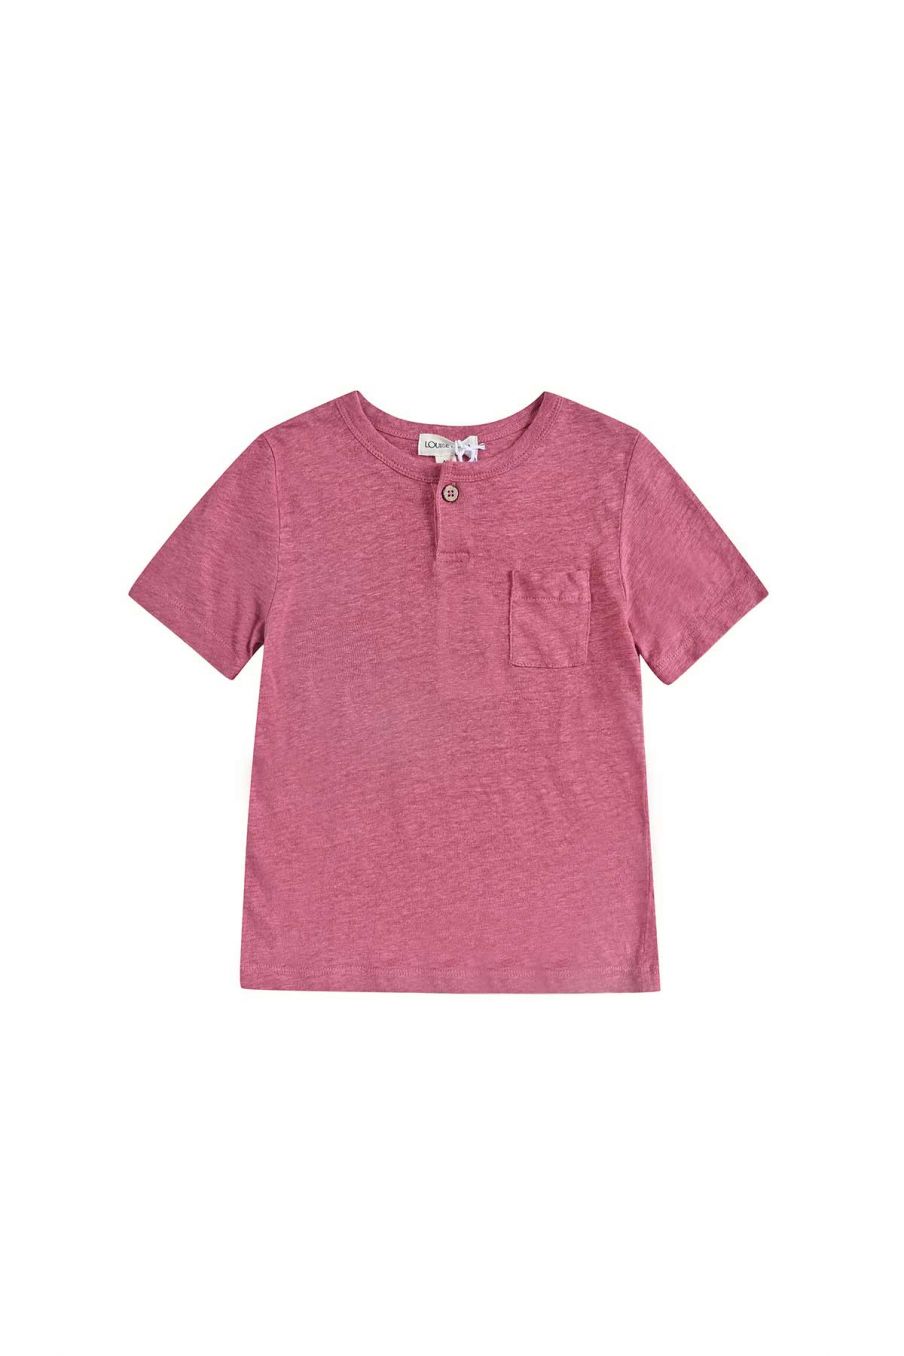 kid-unisex-t-shirt-tazo-raspberry